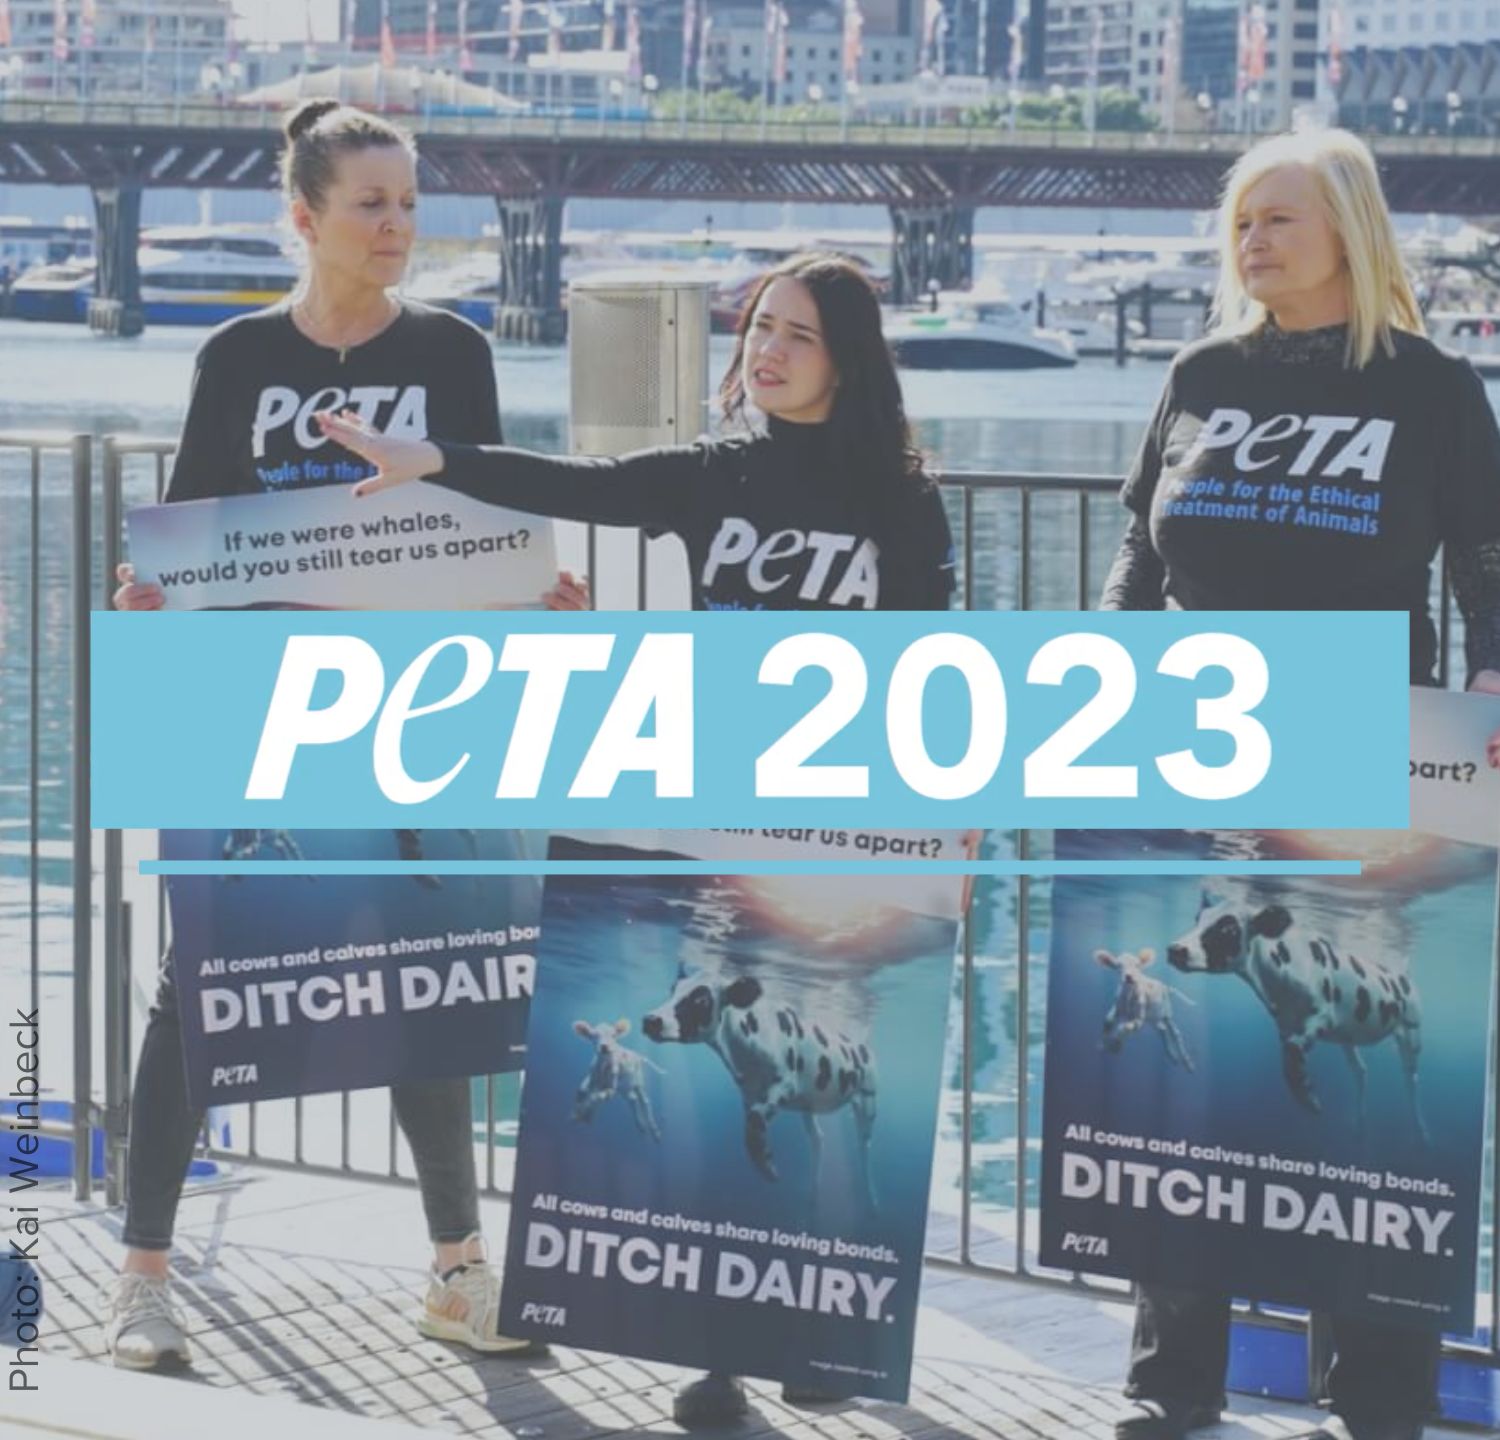 PETA Australia’s Victories for Animals in 2023